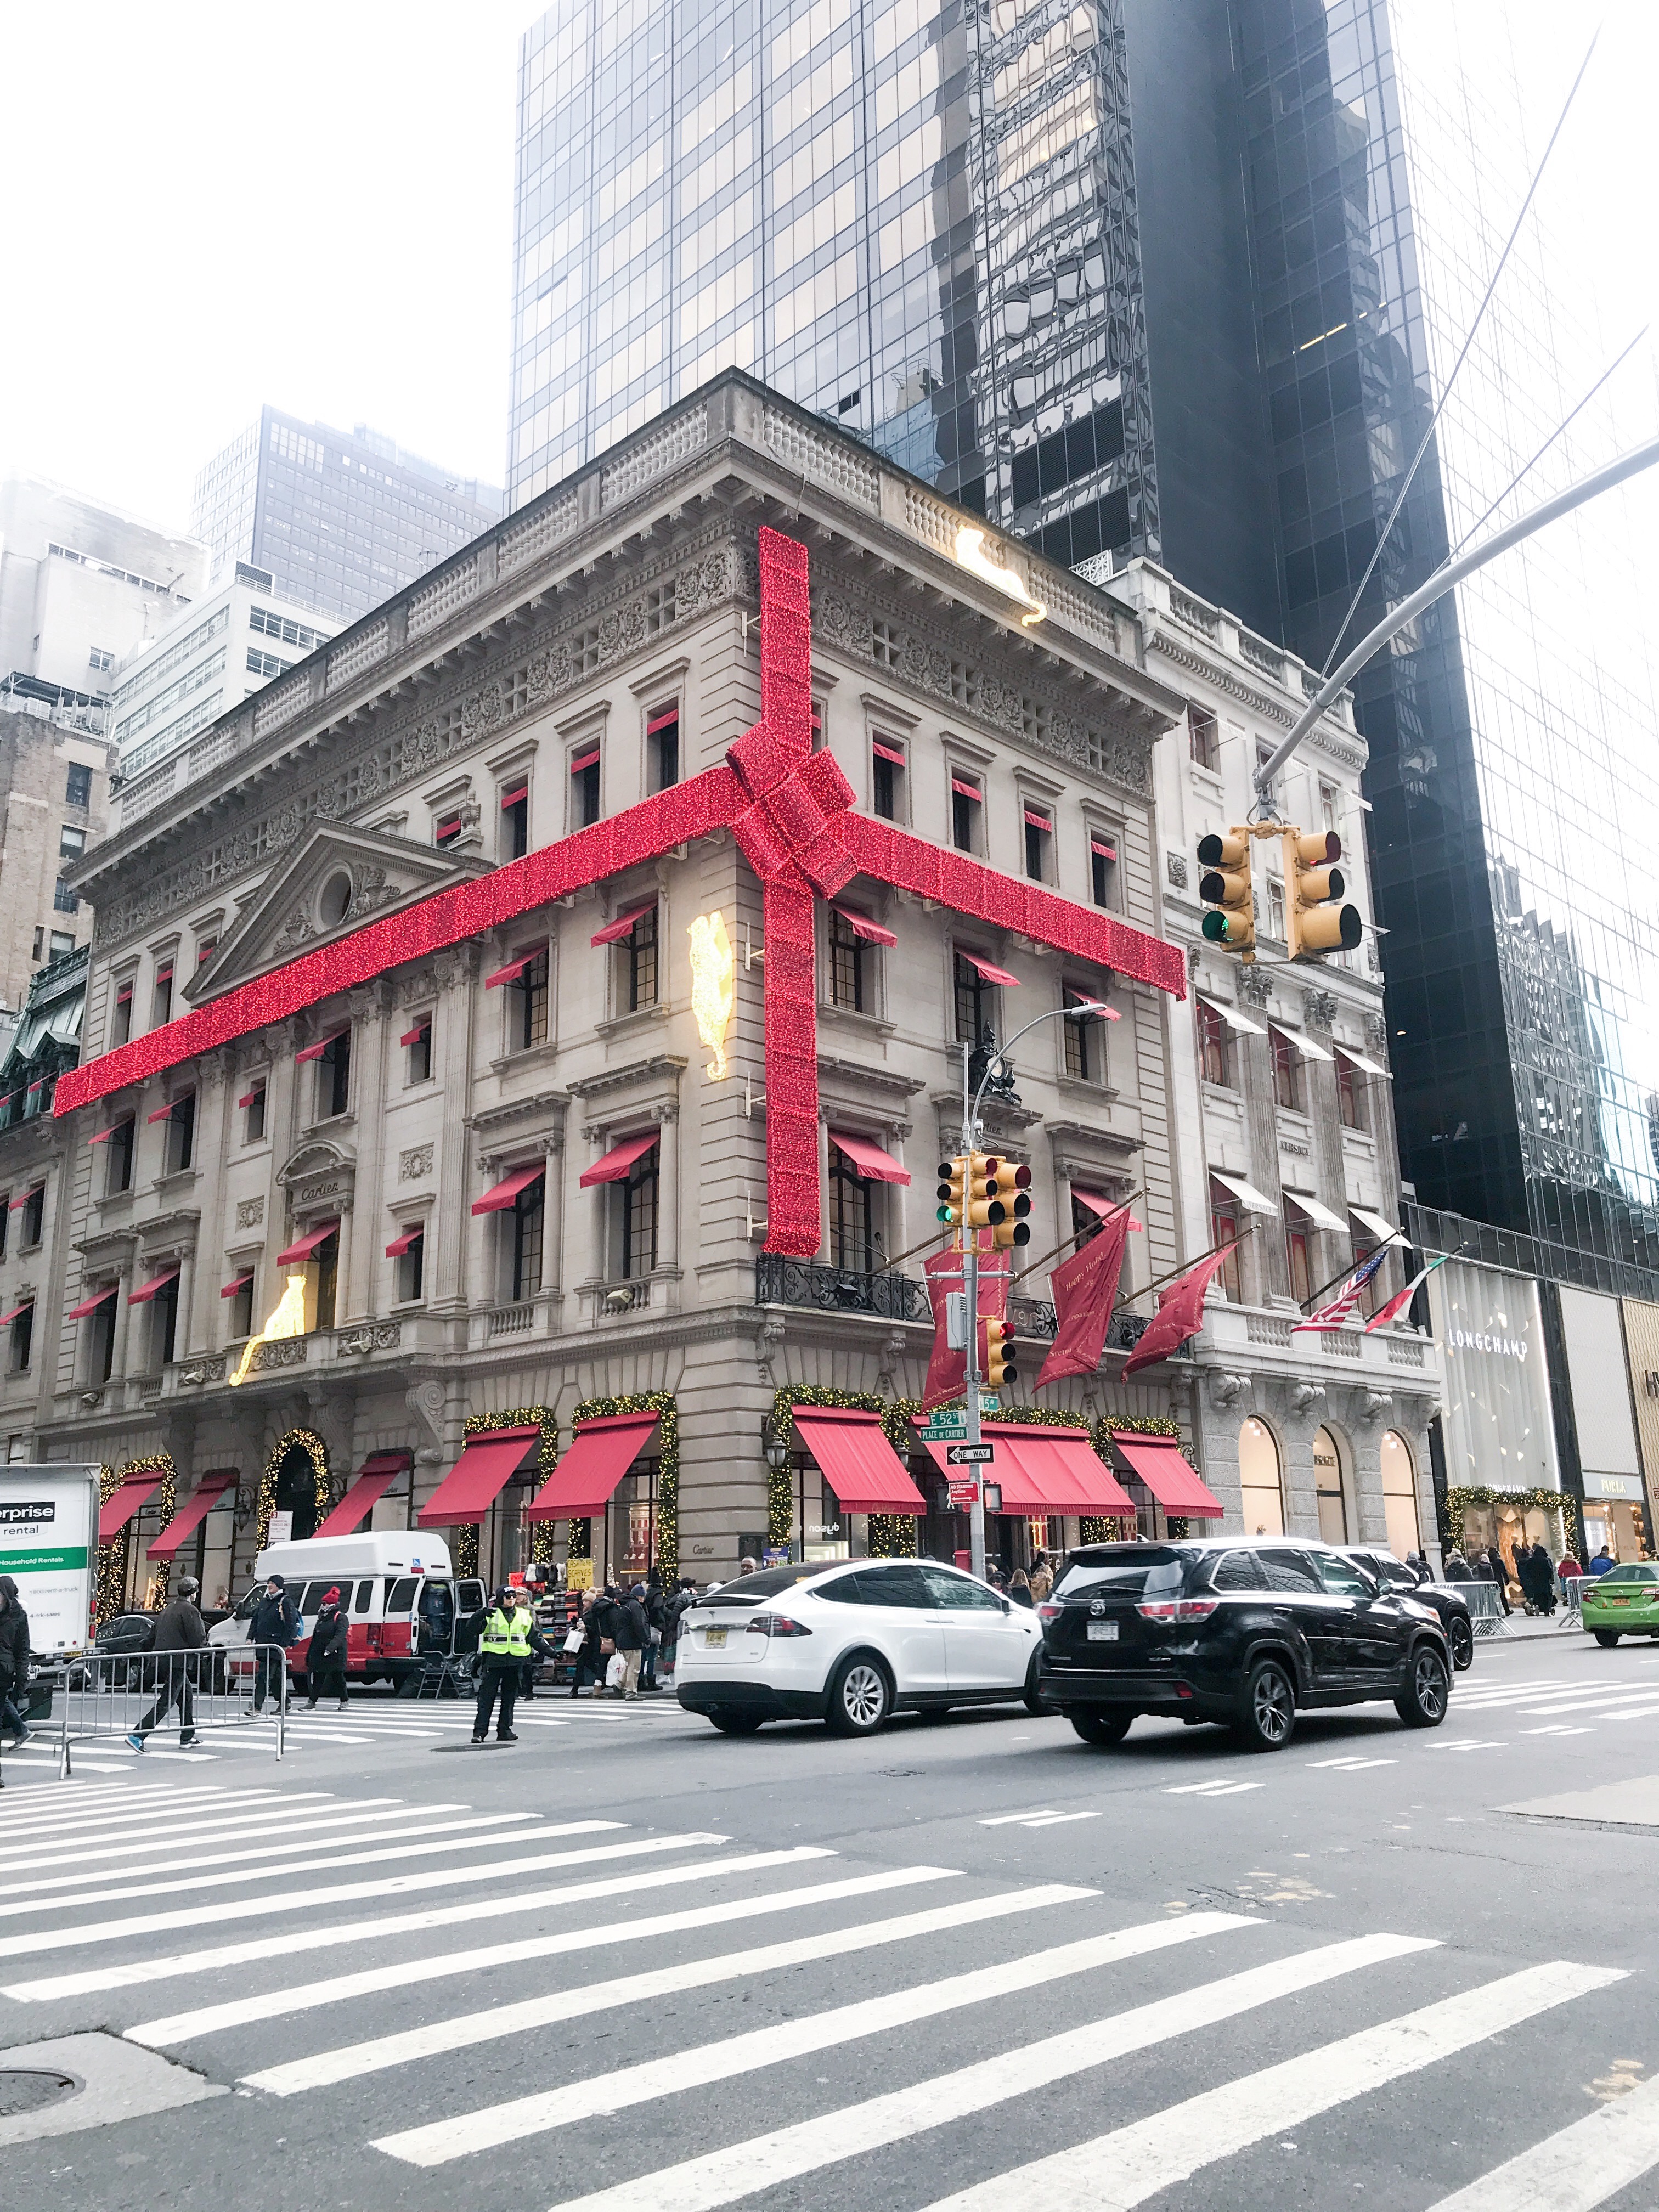 The Cartier building